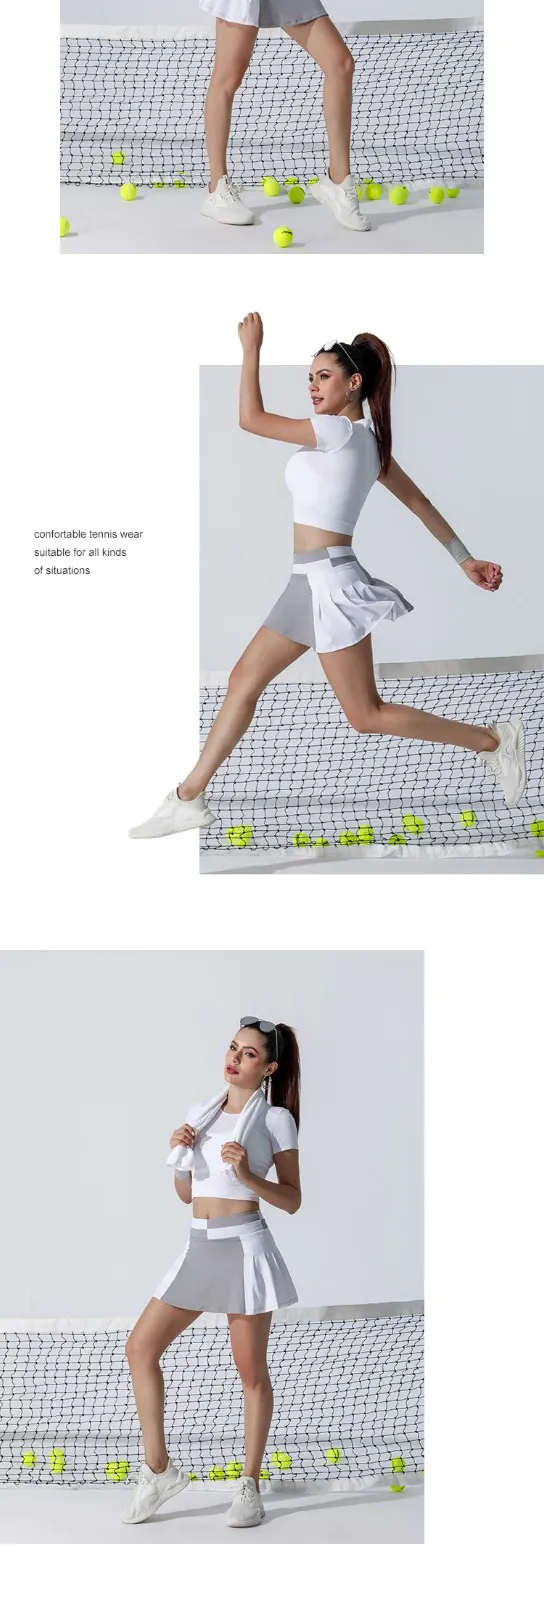 INGOR SPORTSWEAR fashion women's tennis player outfit factory for girls